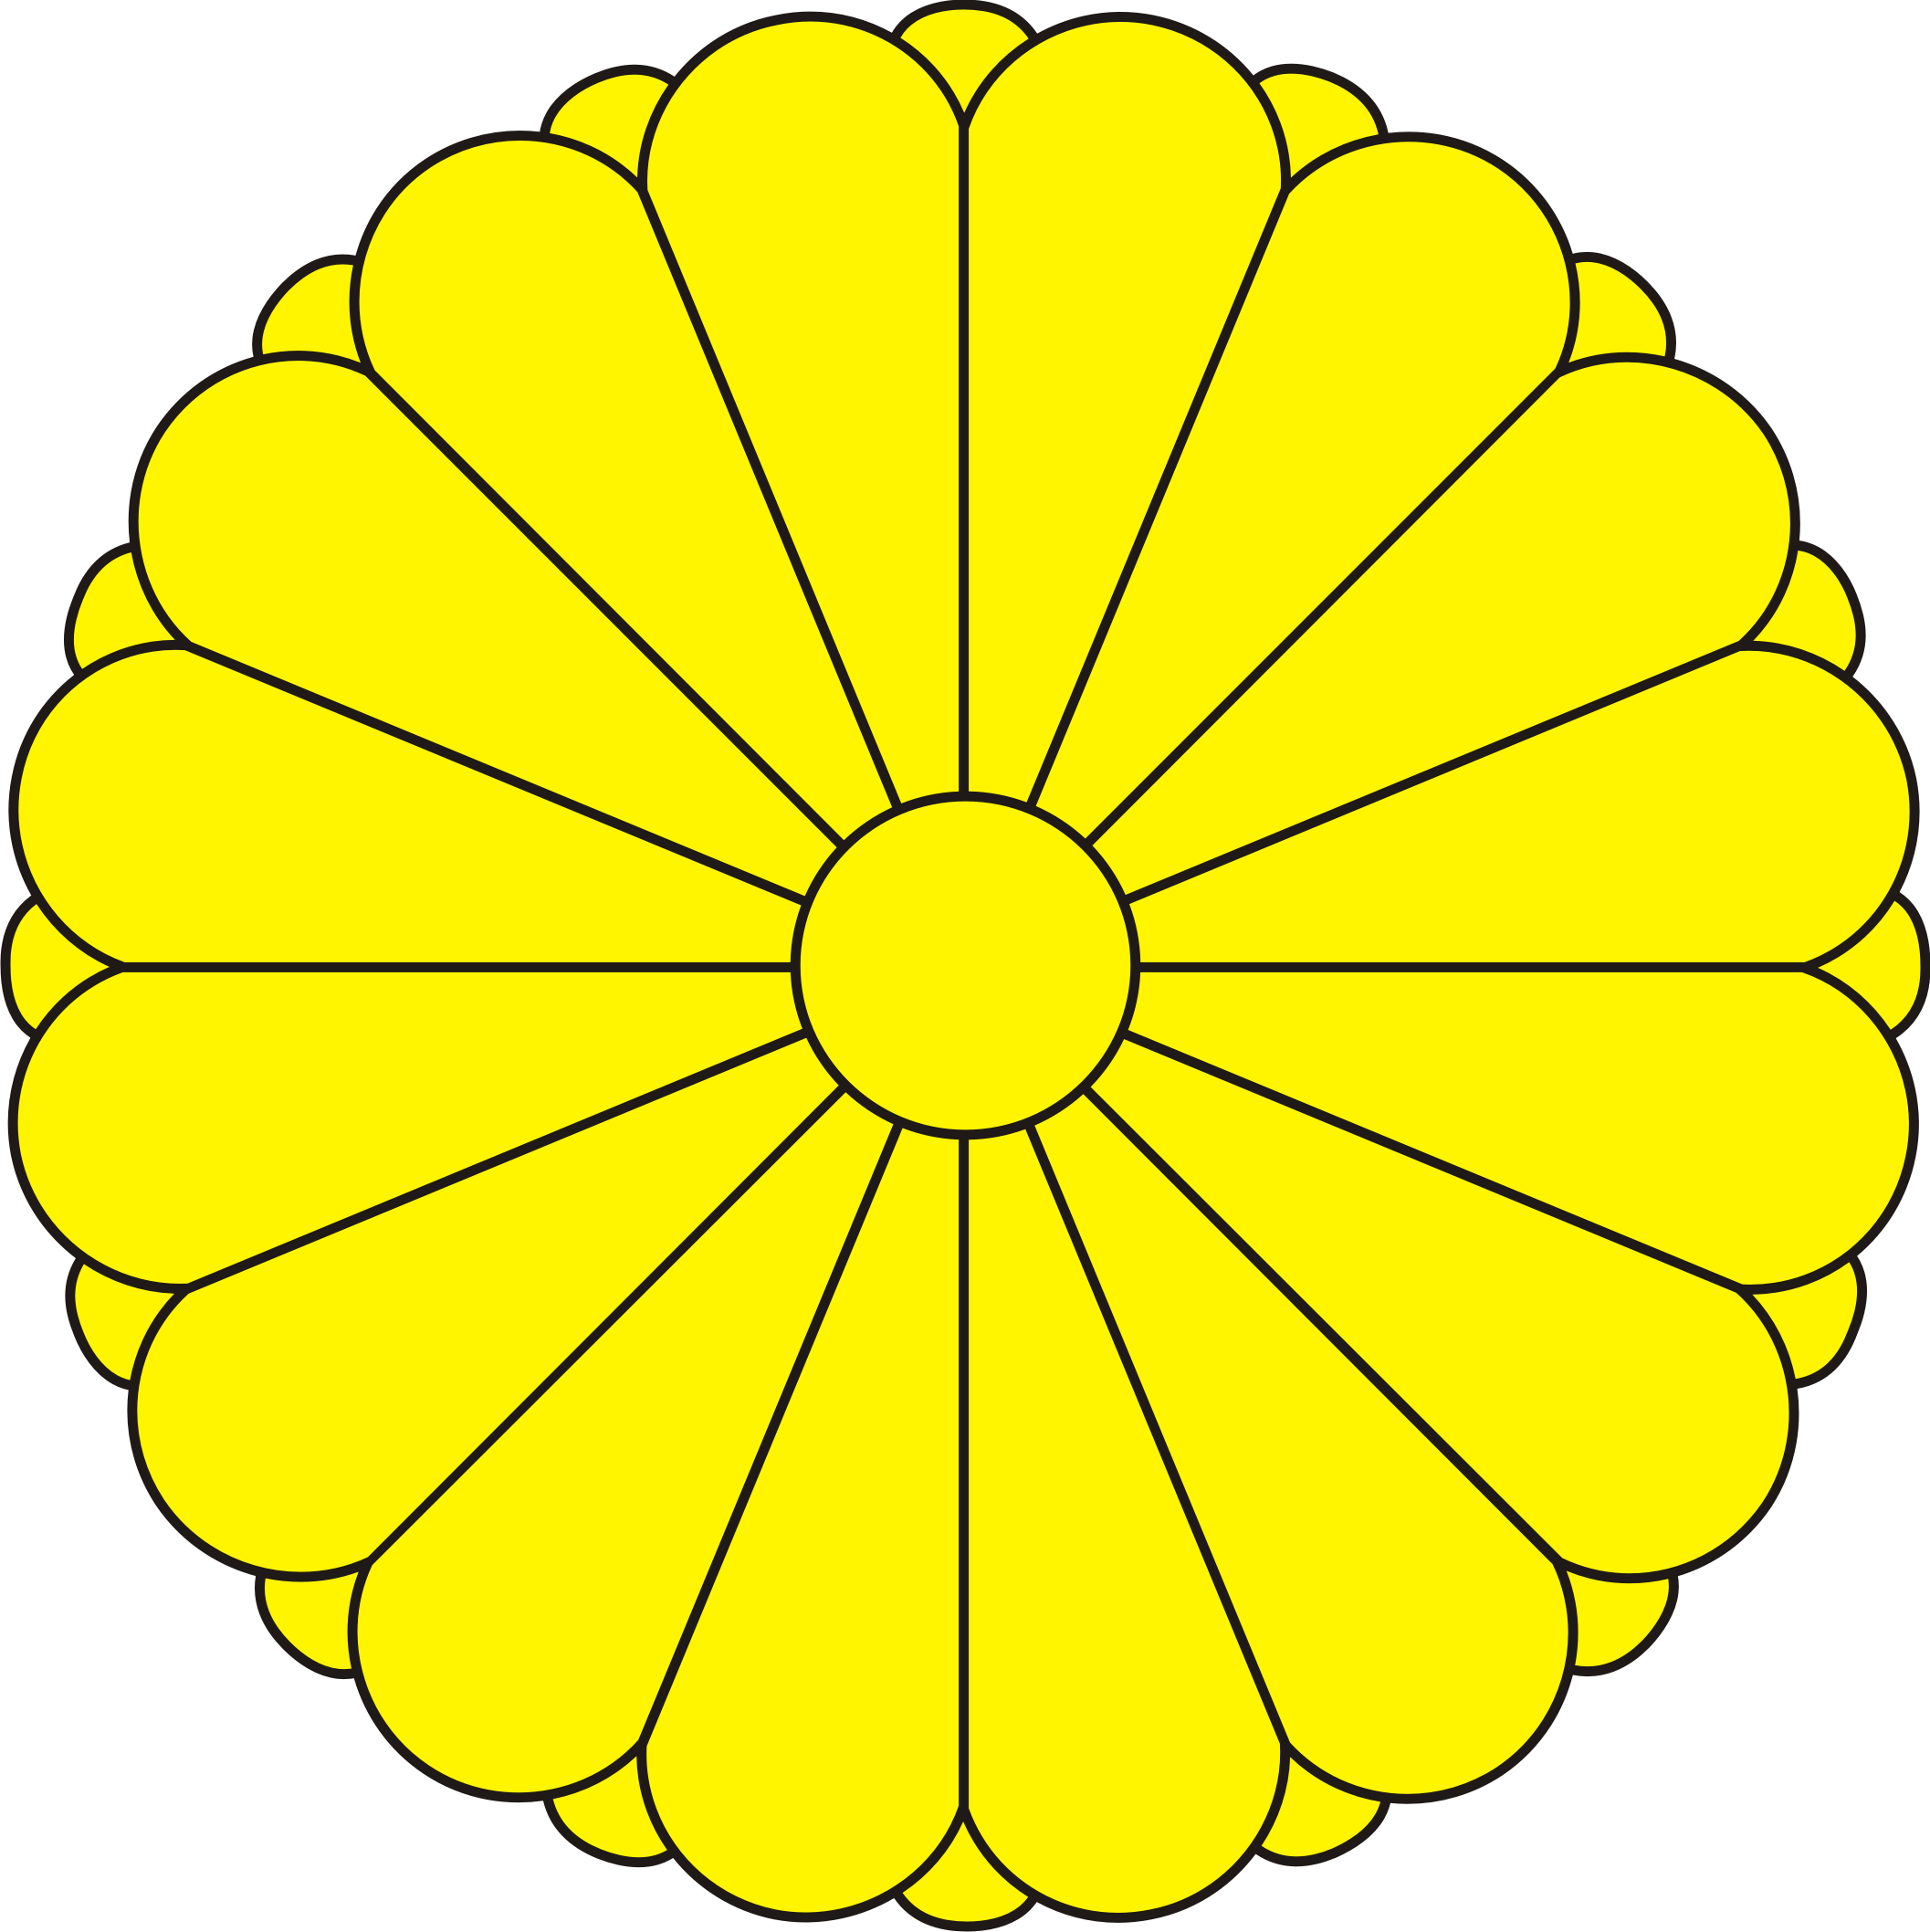 Japan clipart japan emperor. Vector emblem of imperial